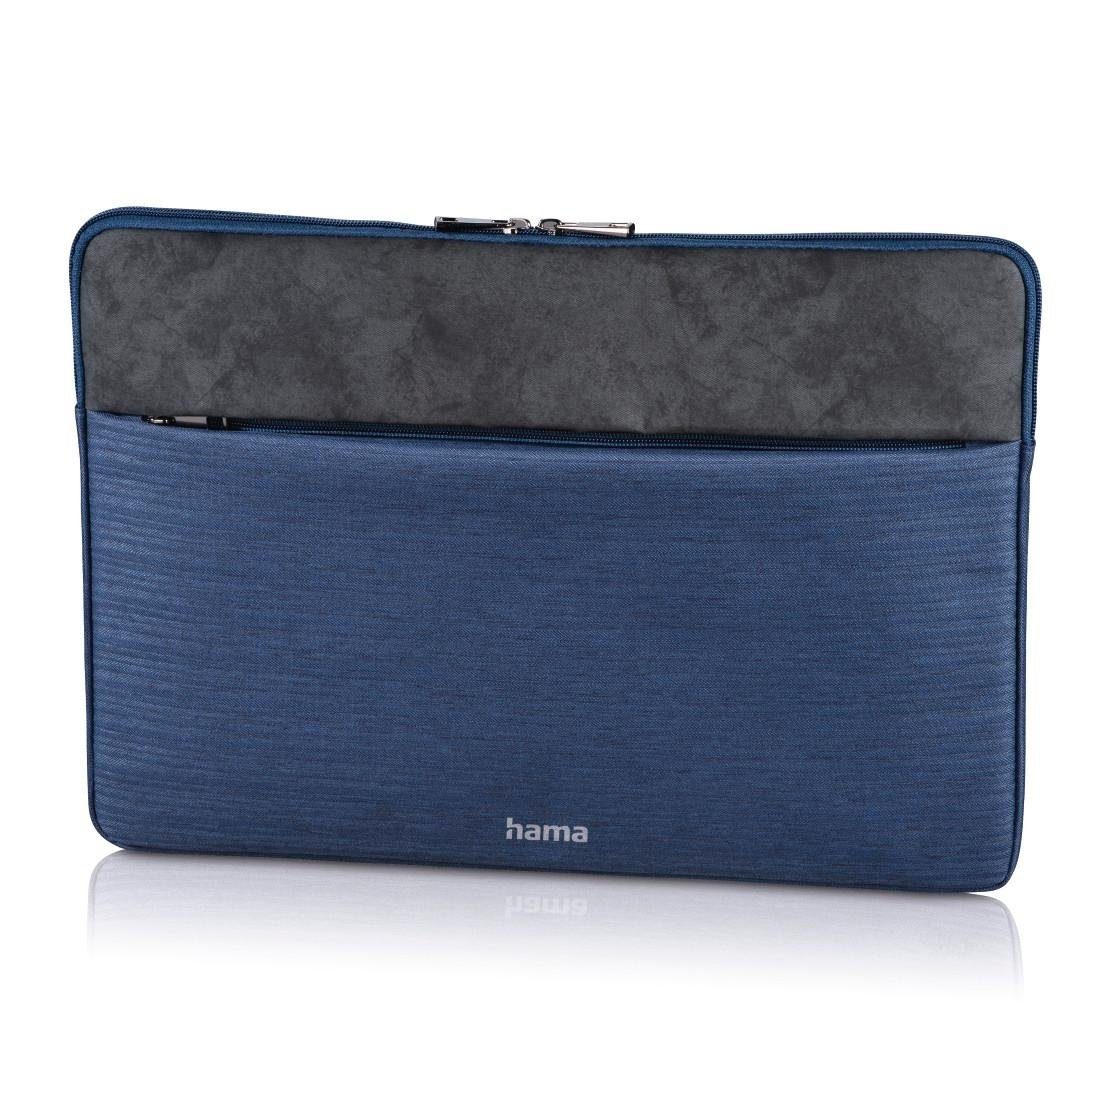 cm "Tayrona", Hama Laptoptasche Notebook-Sleeve Laptop-Sleeve 40 dunkelblau (15,6), bis